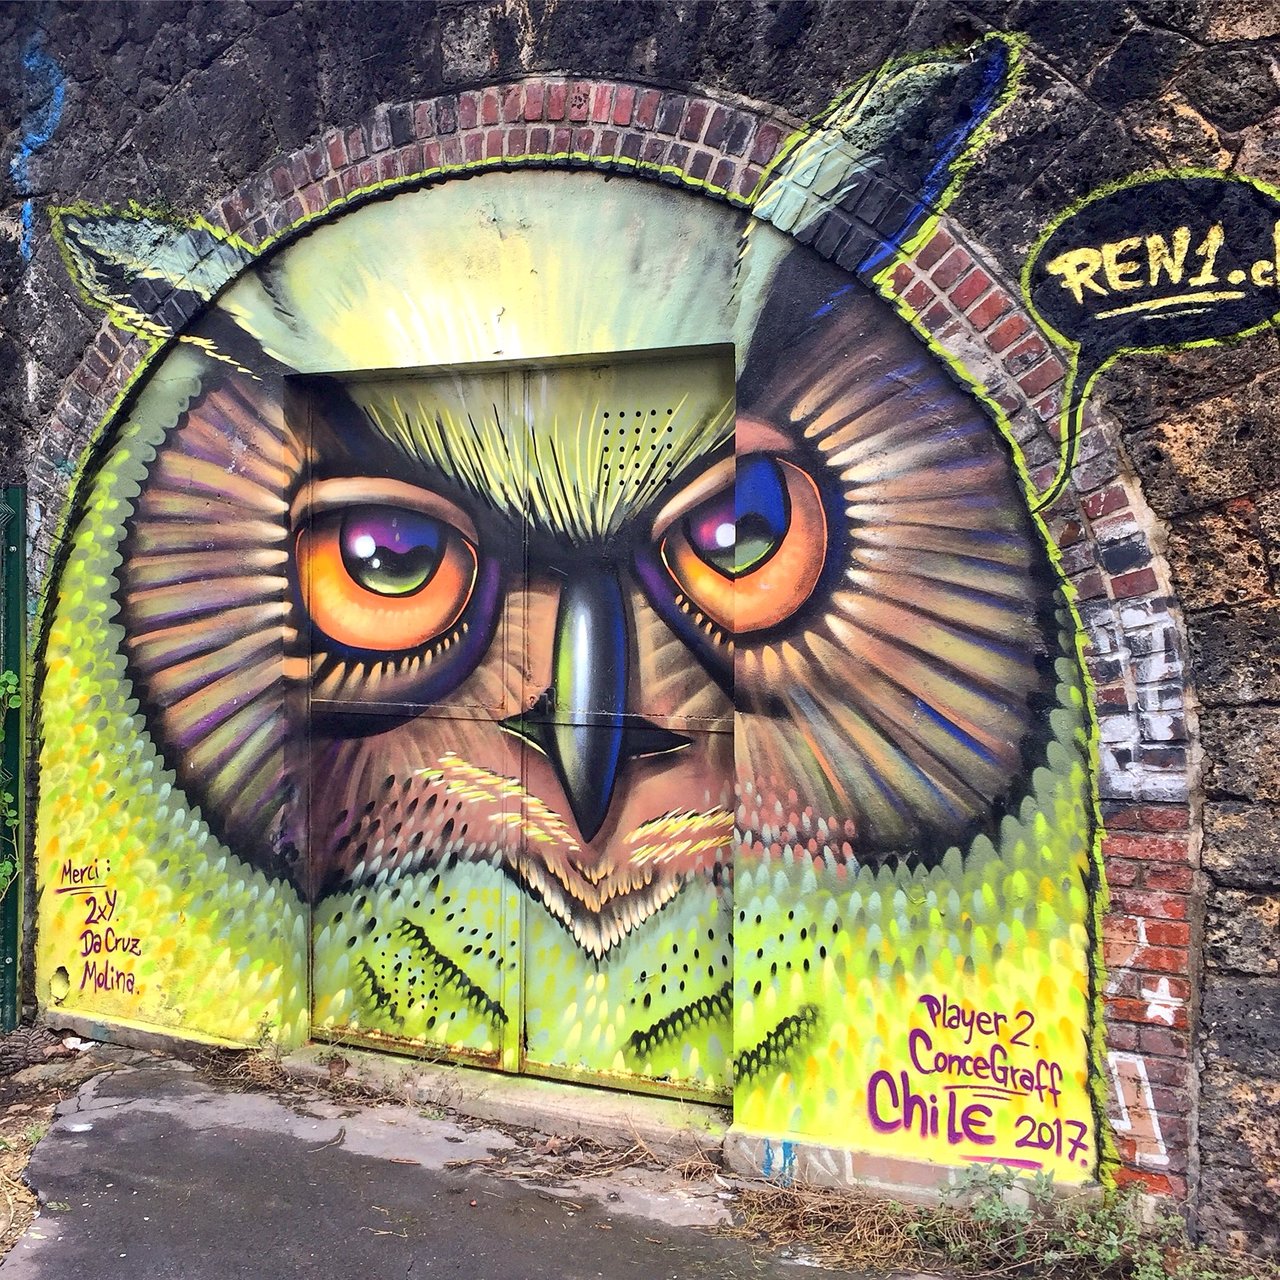 Freestyle Owl by #ren1 #rengraffiti #owl #streetart #graffiti #streetartist #streetarteverywhere #graffitiart #spray #urbanart #nirindastreet #paris https://t.co/dahuUuDkPG